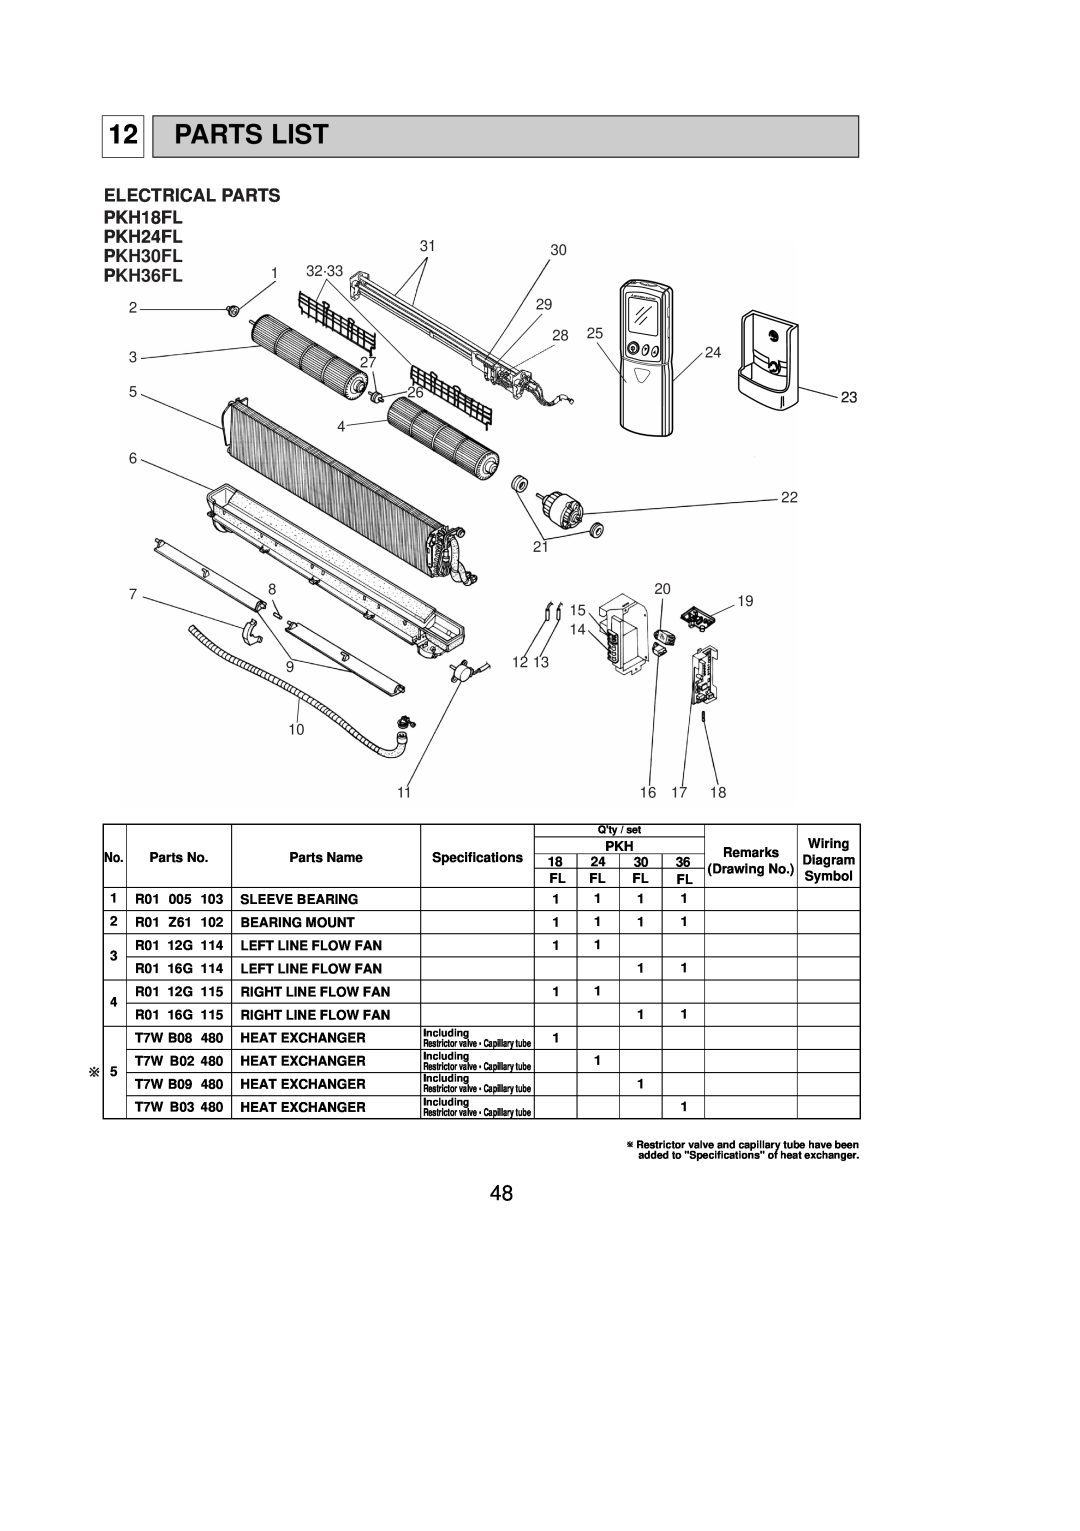 Mitsubishi Electronics Parts List, Electrical Parts, PKH18FL PKH24FL PKH30FL PKH36FL, Wiring, Parts No, Parts Name 